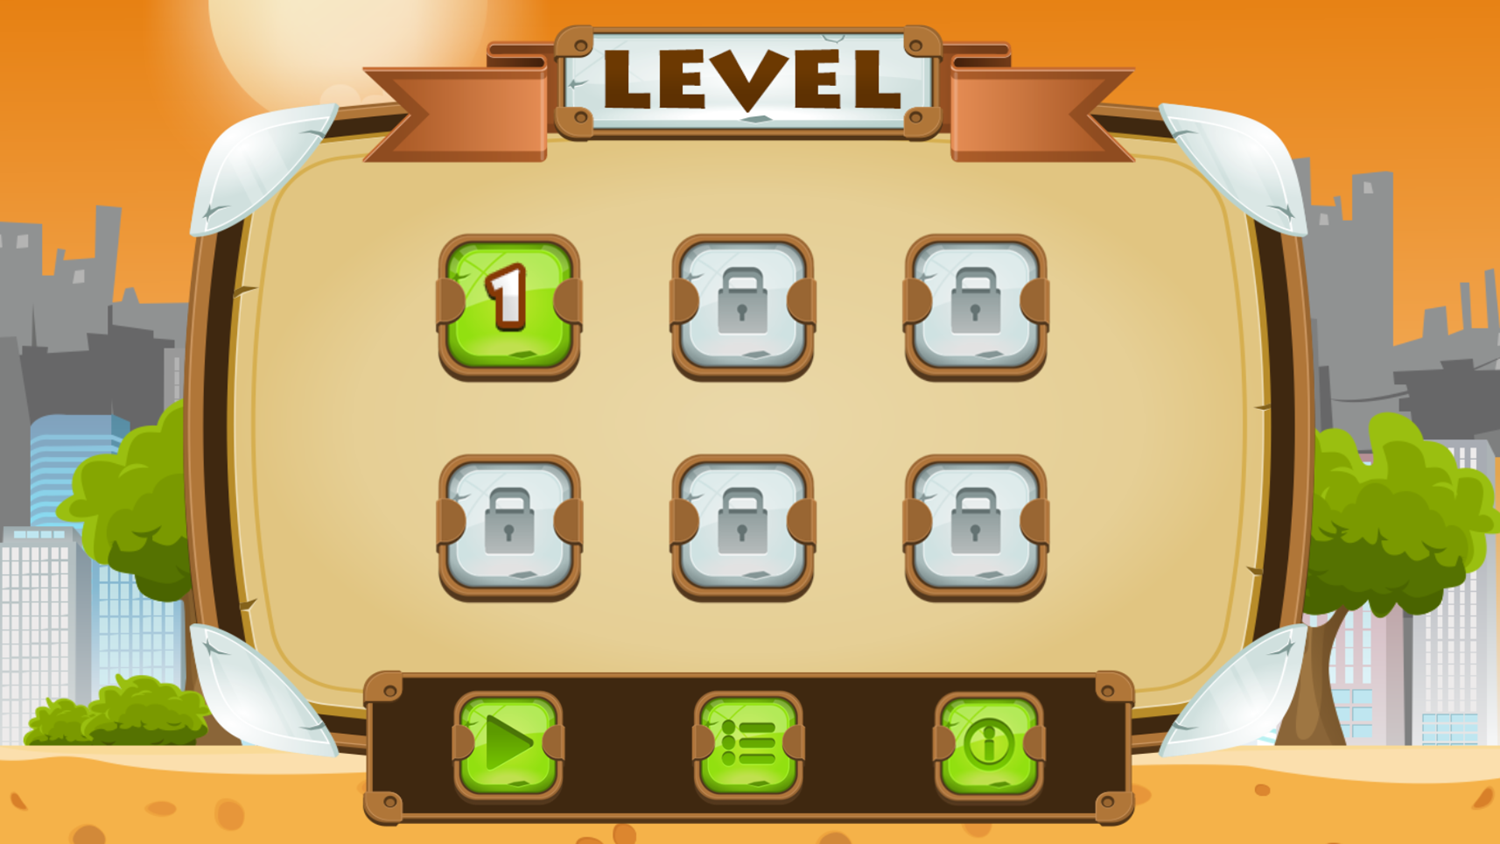 Ninja Boy Adventure Game Level Select Screenshot.